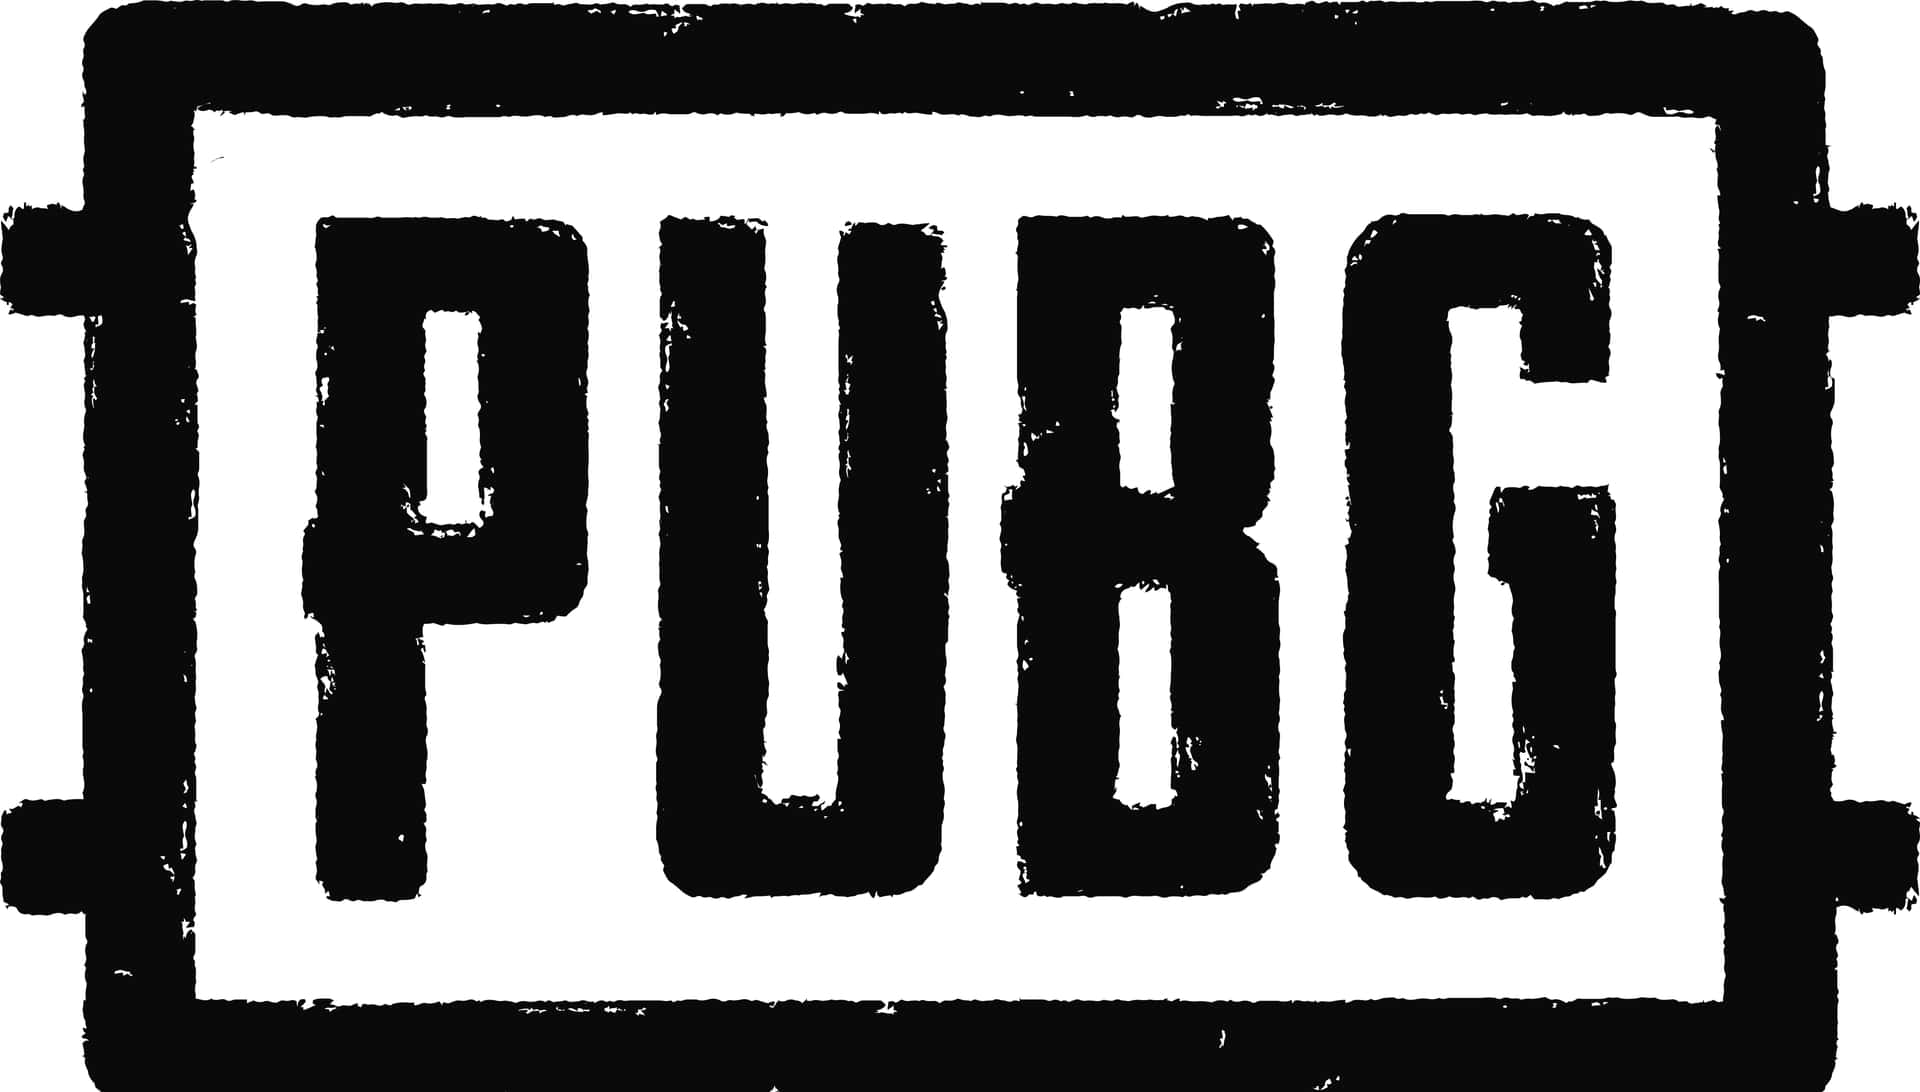 PUBG Logo